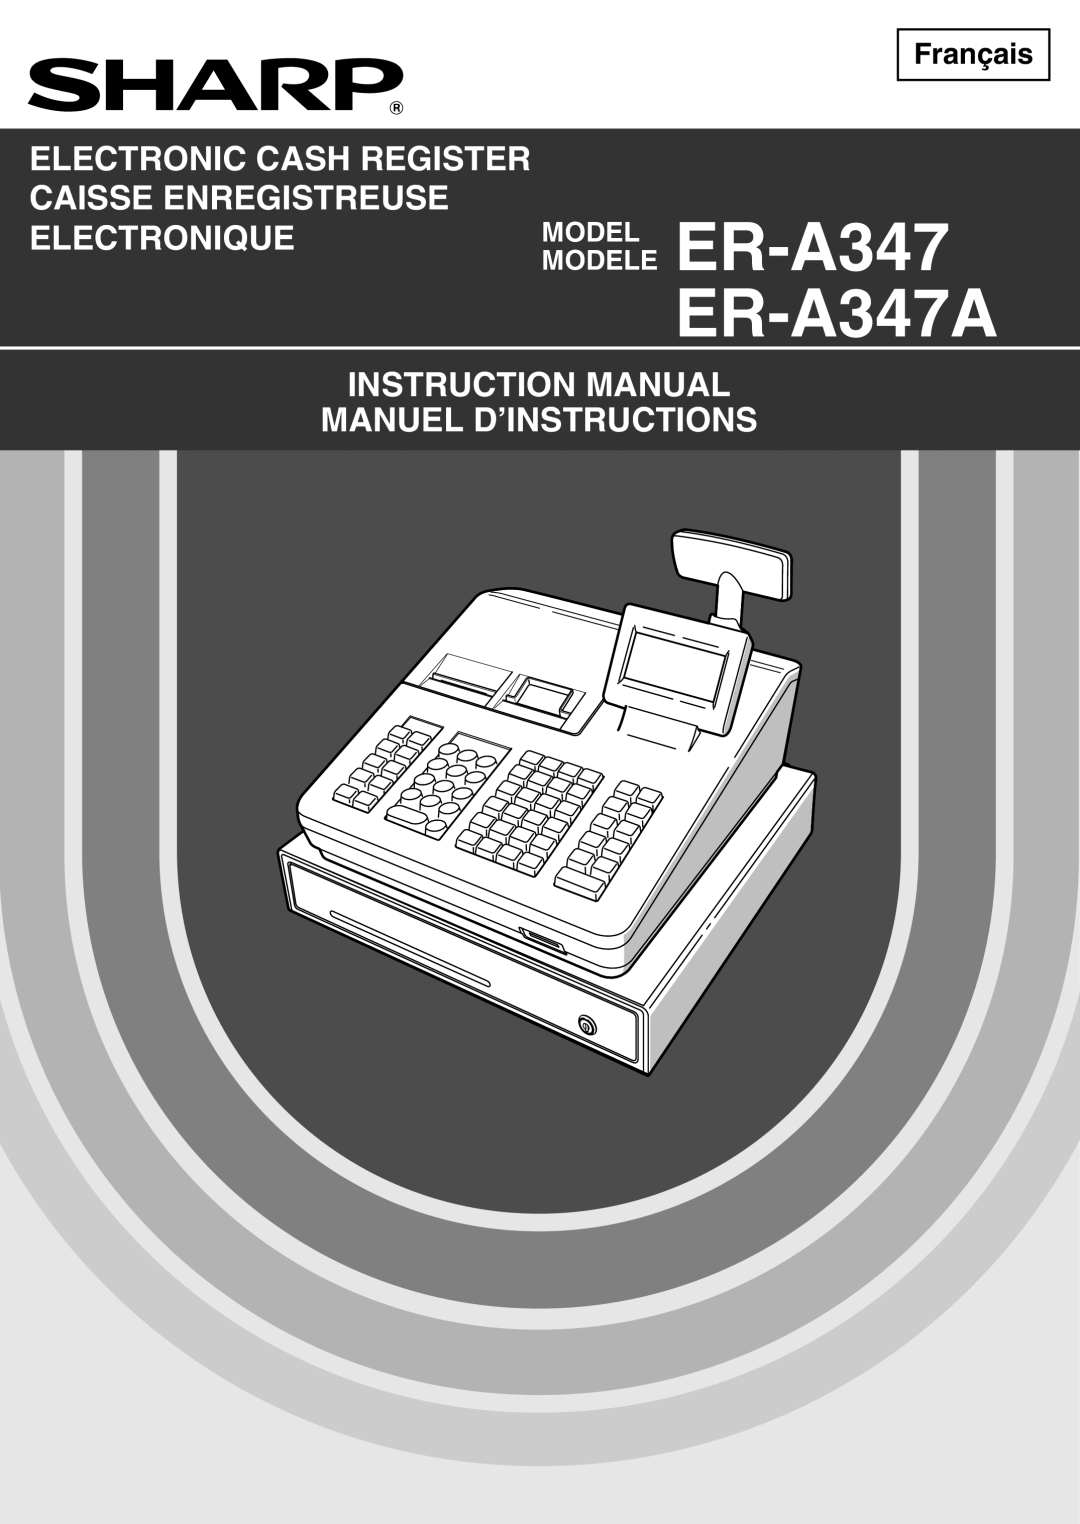 Sharp instruction manual ER-A347 ER-A347A, Electronic Cash Register Caisse Enregistreuse Electronique, English 